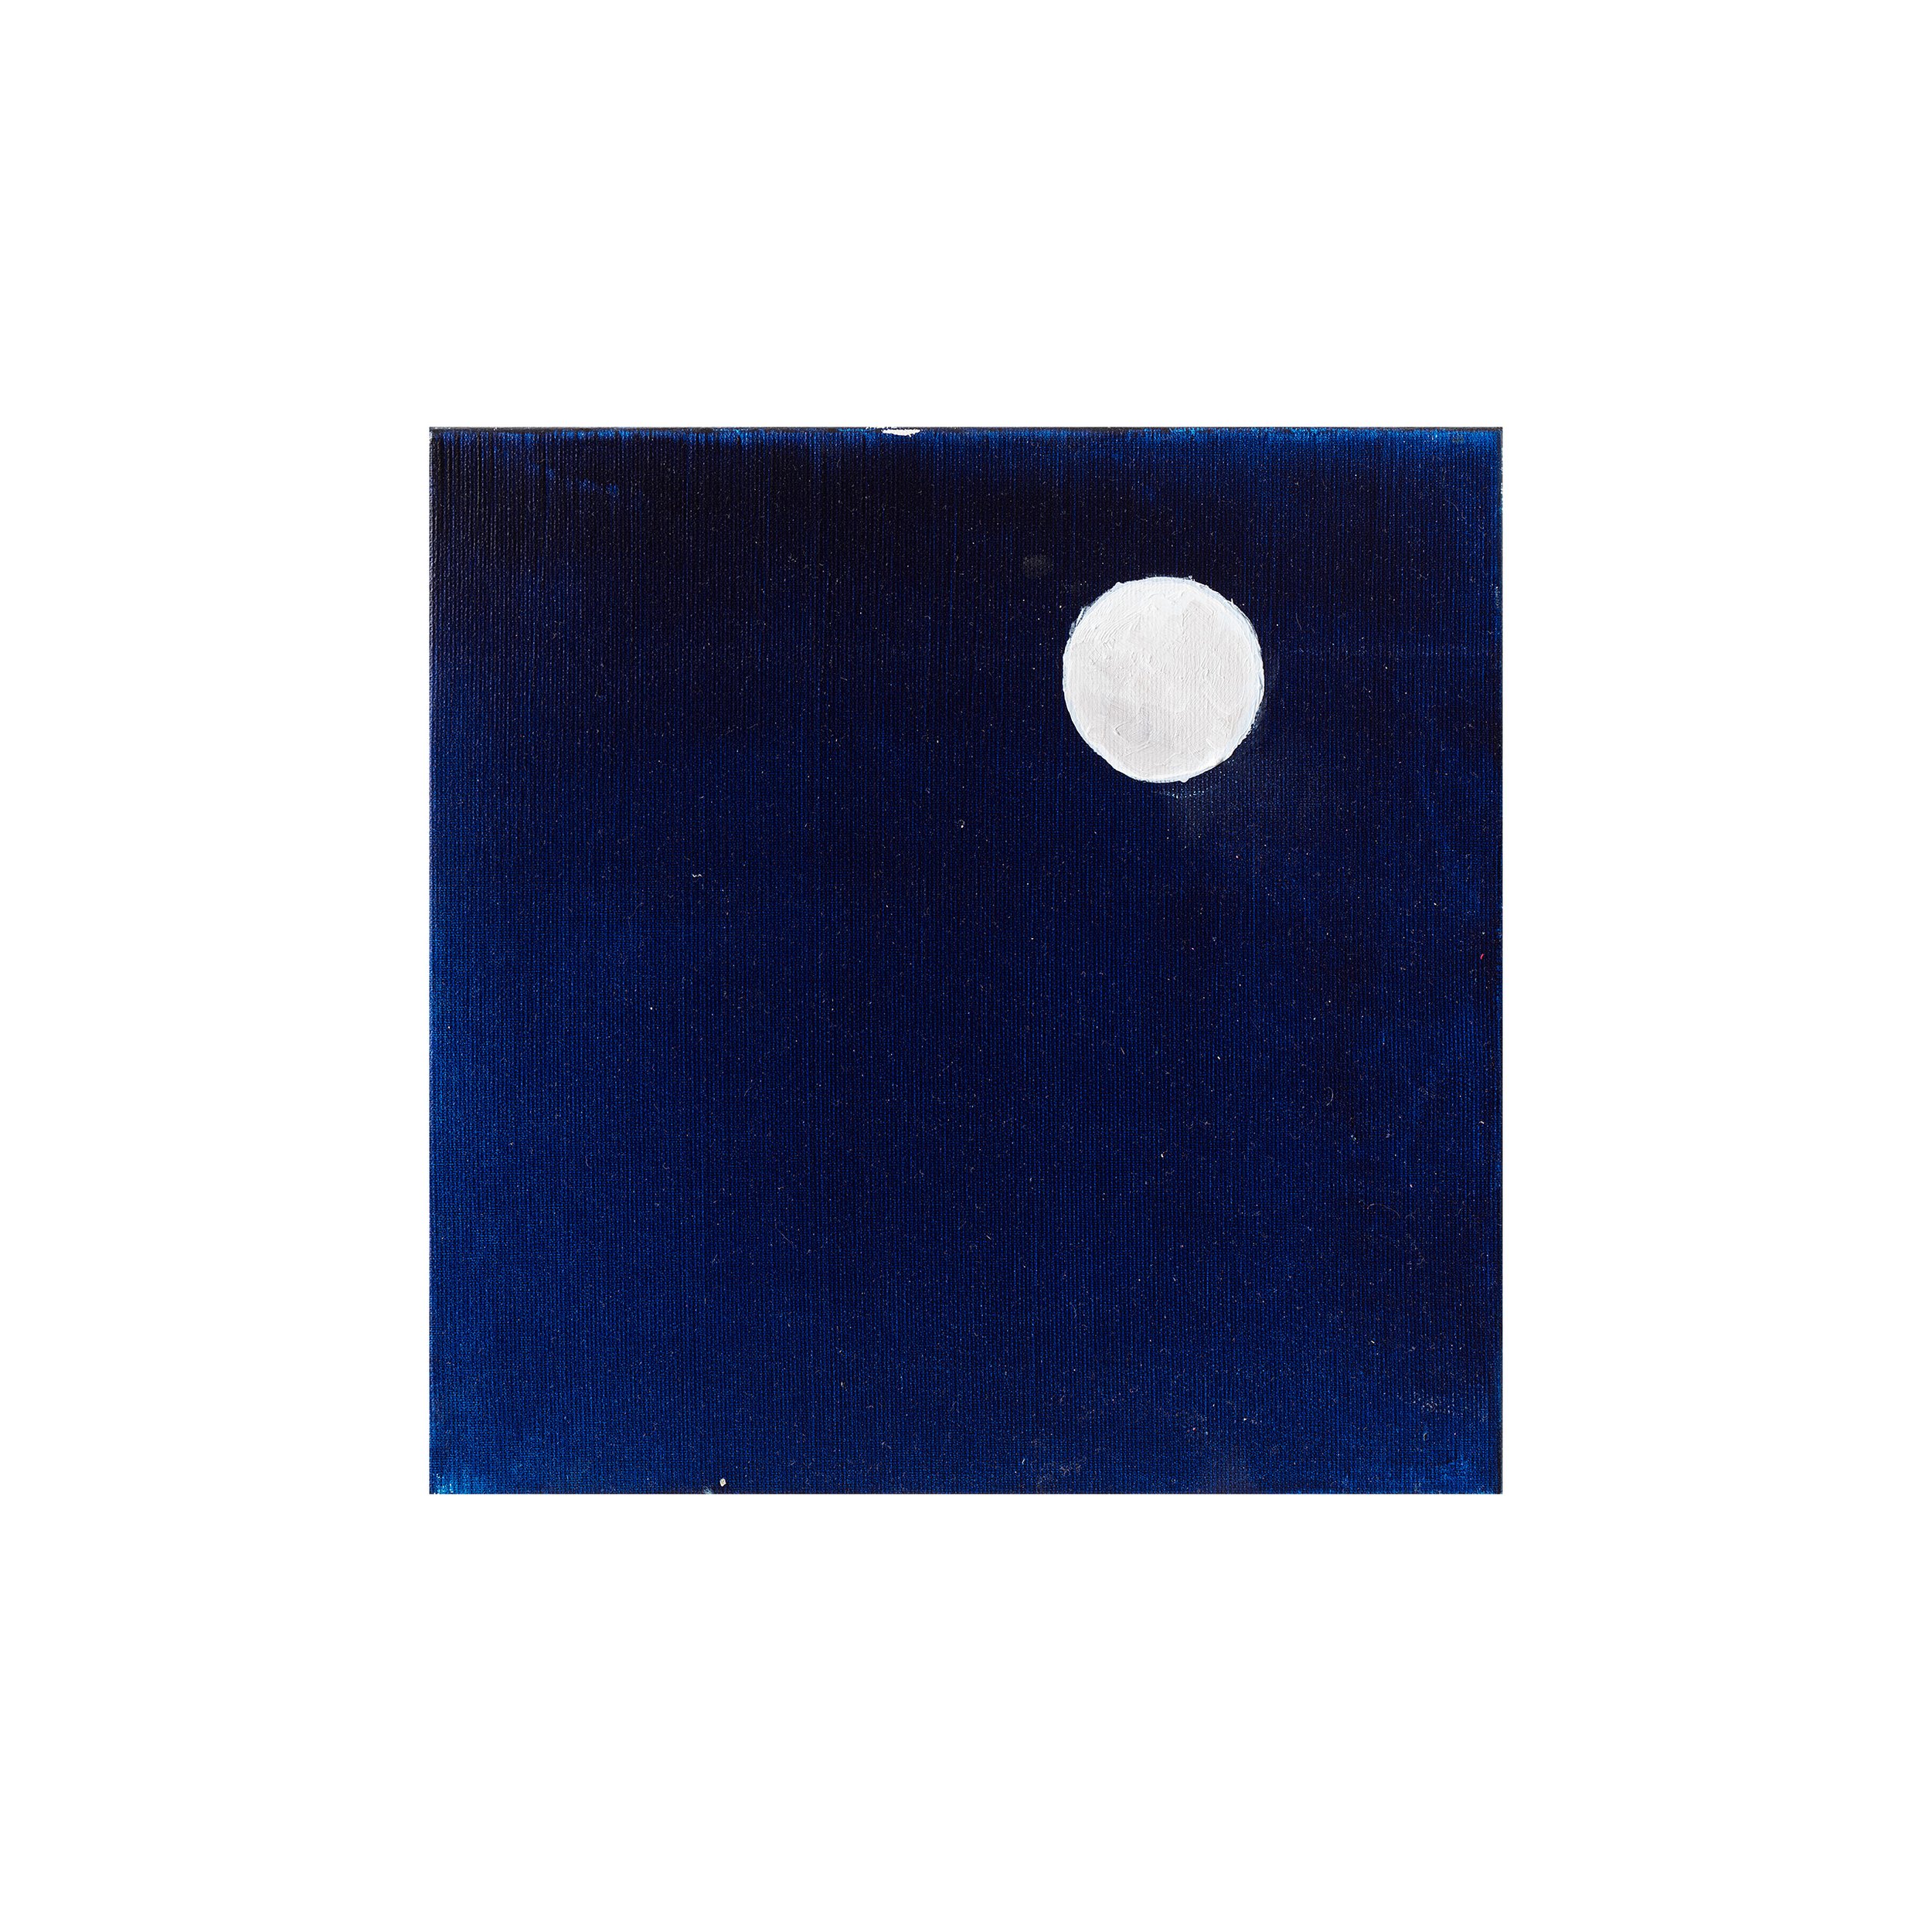   Moon II (2022)    oil on canvas 30x30 cm    